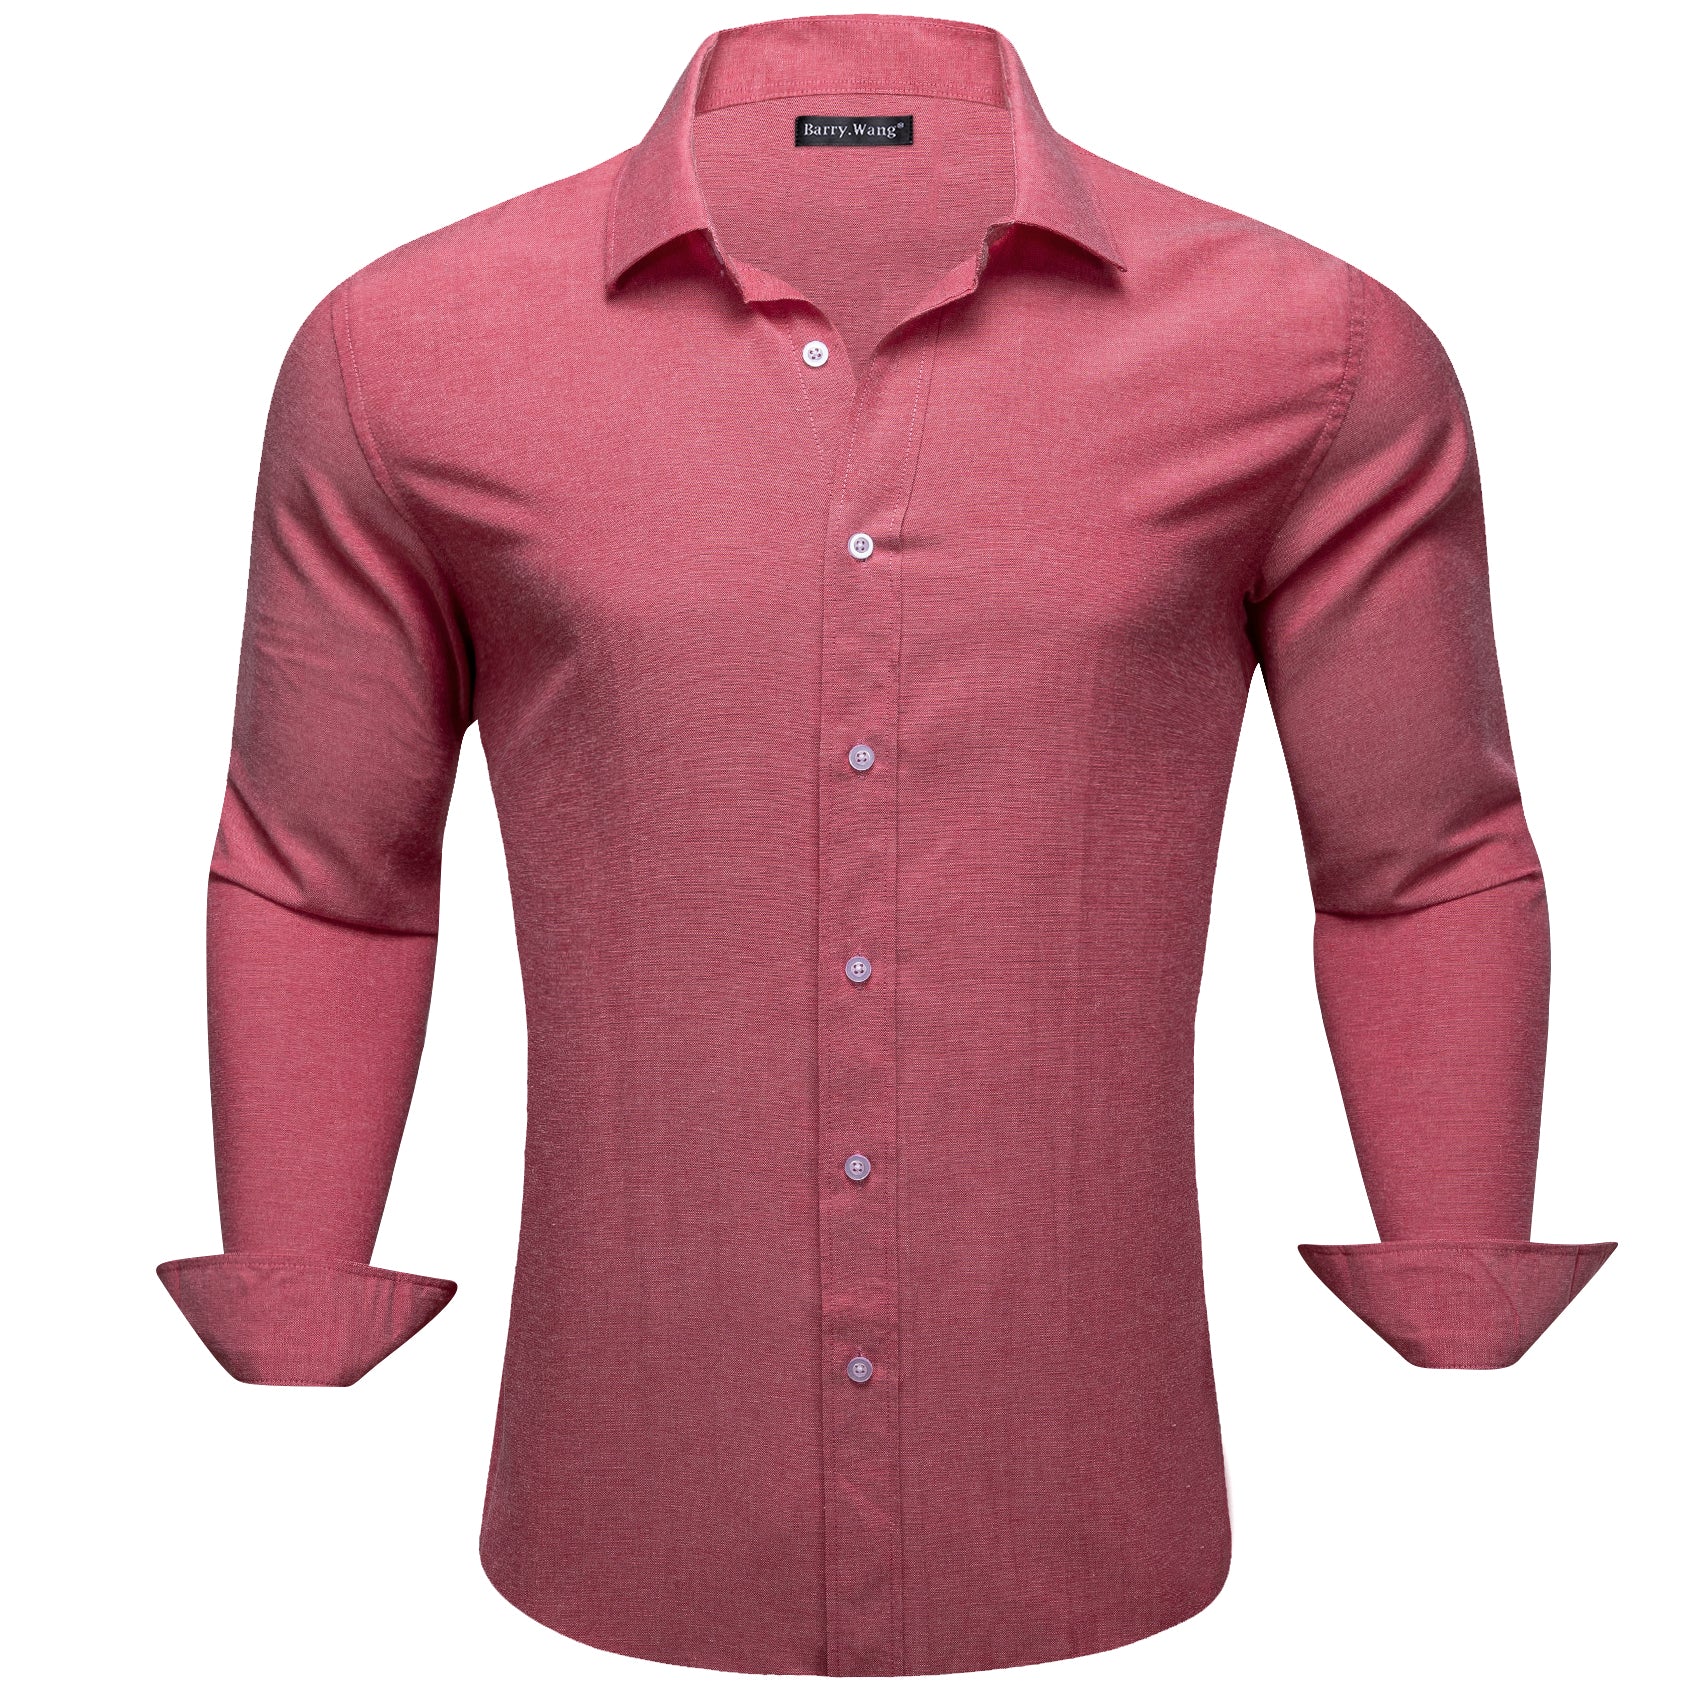 Barry.Wang Button Down Shirt Indian Red Solid Silk Shirt for Men